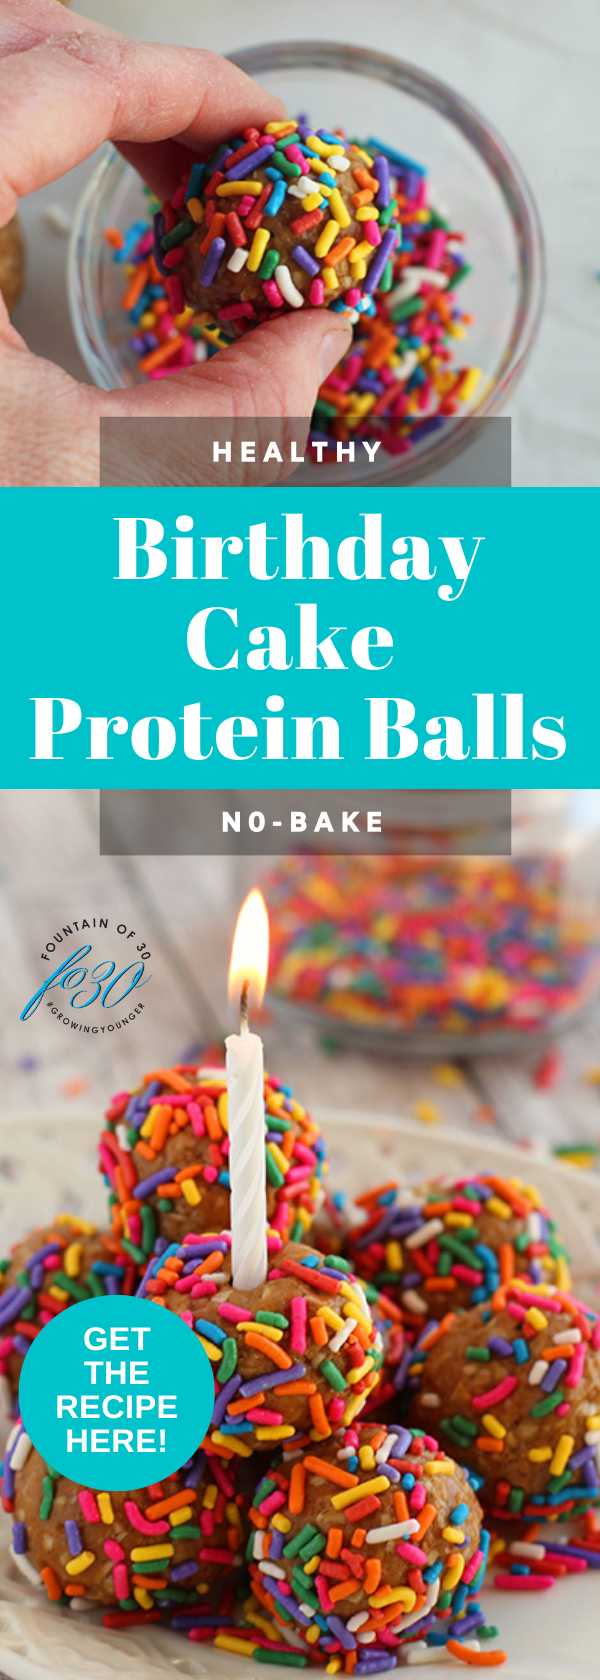 no bake protein balls recipe healthy birthday cake fountainof30